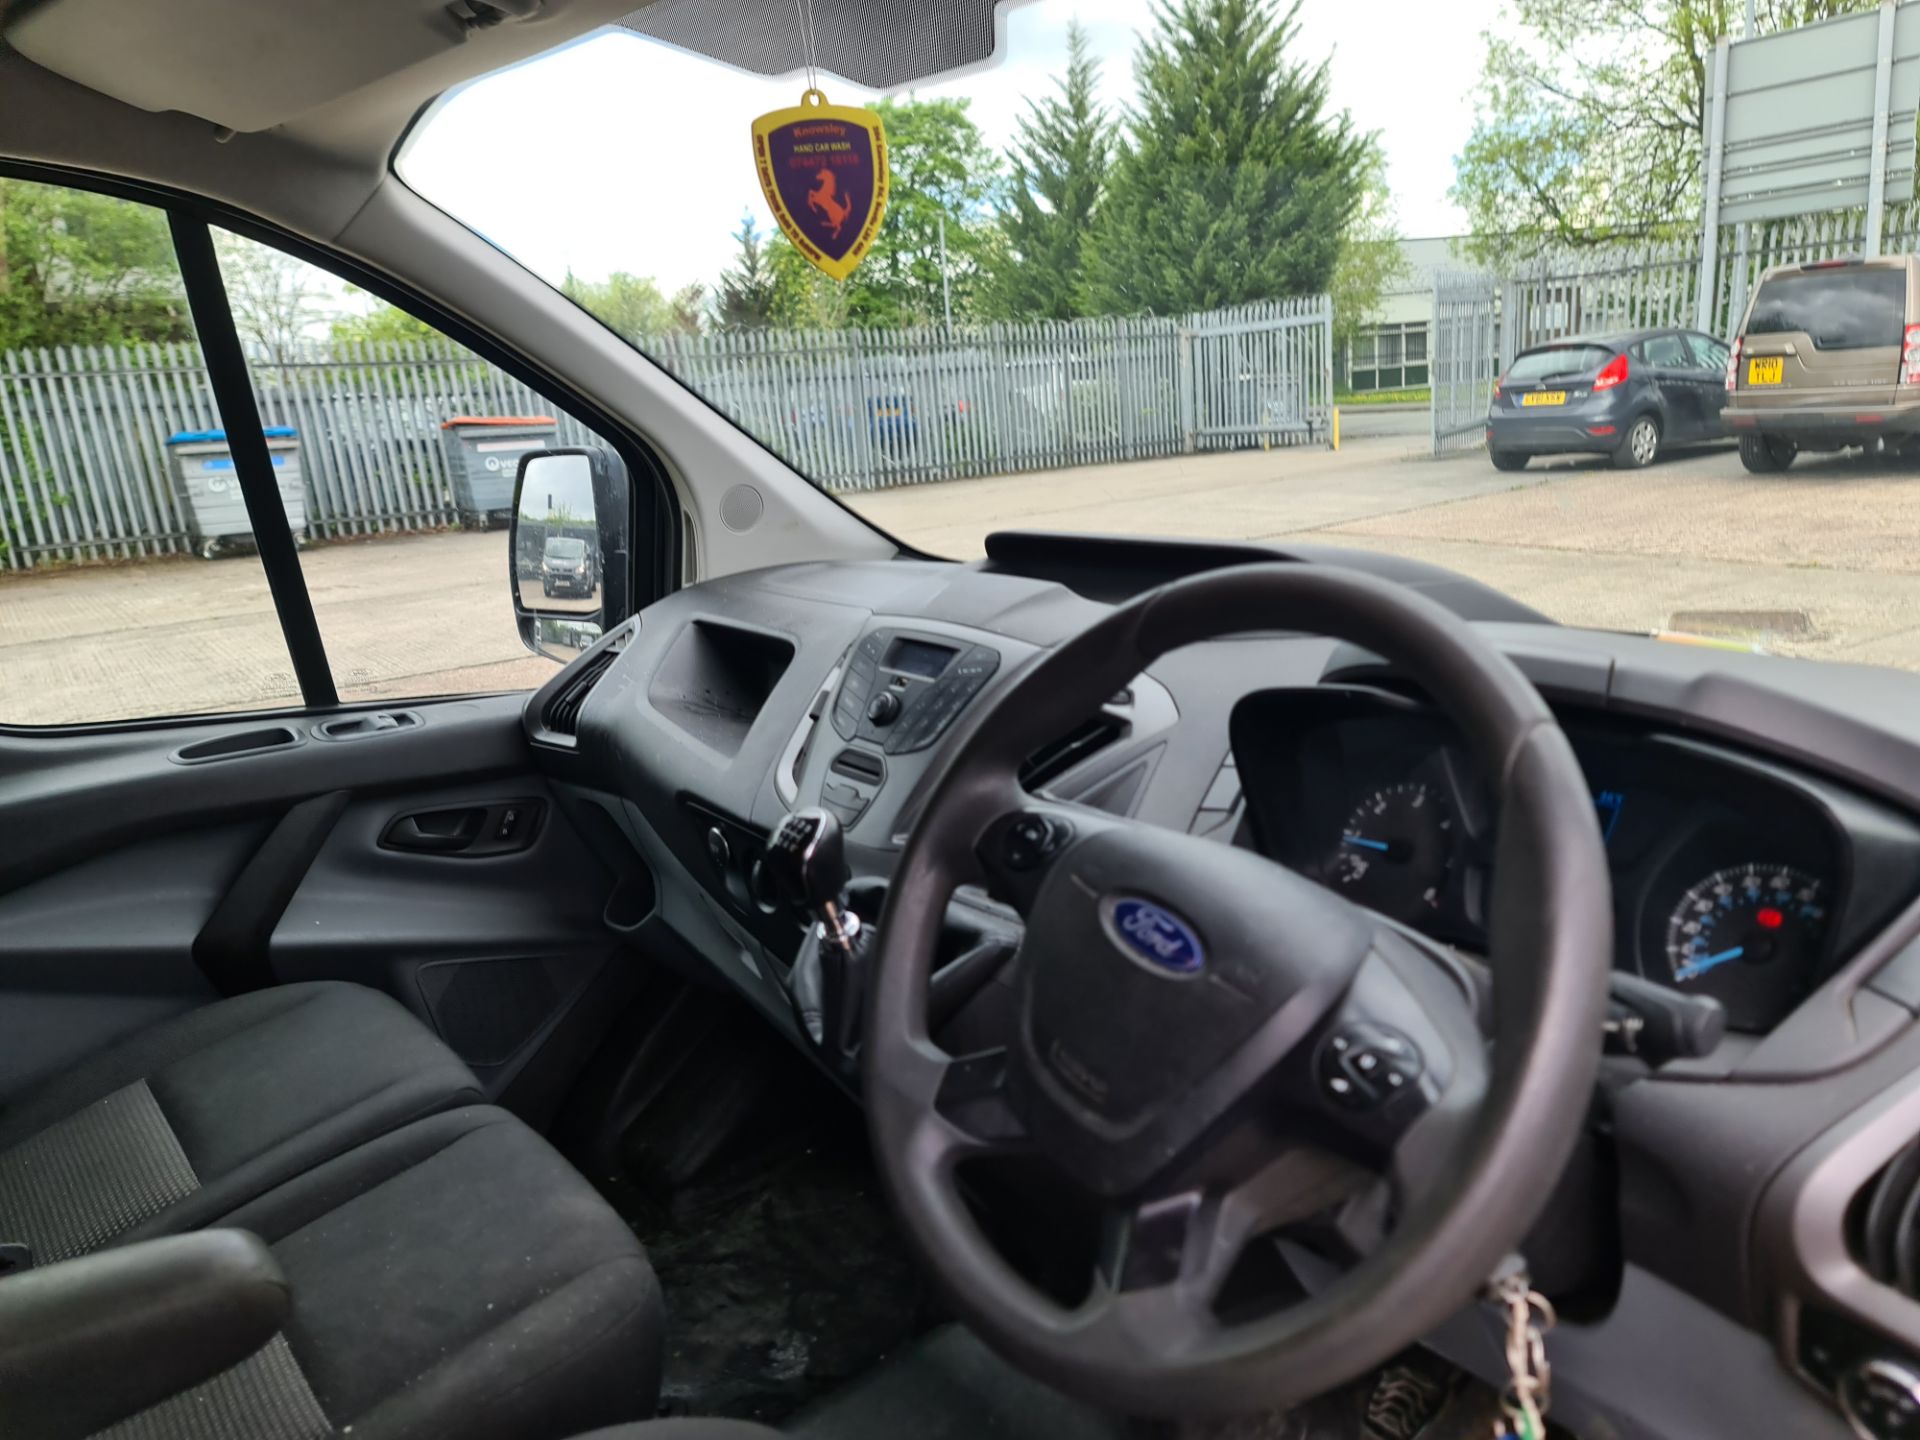 2018 Ford Transit Custom 270 panel van - Image 25 of 74